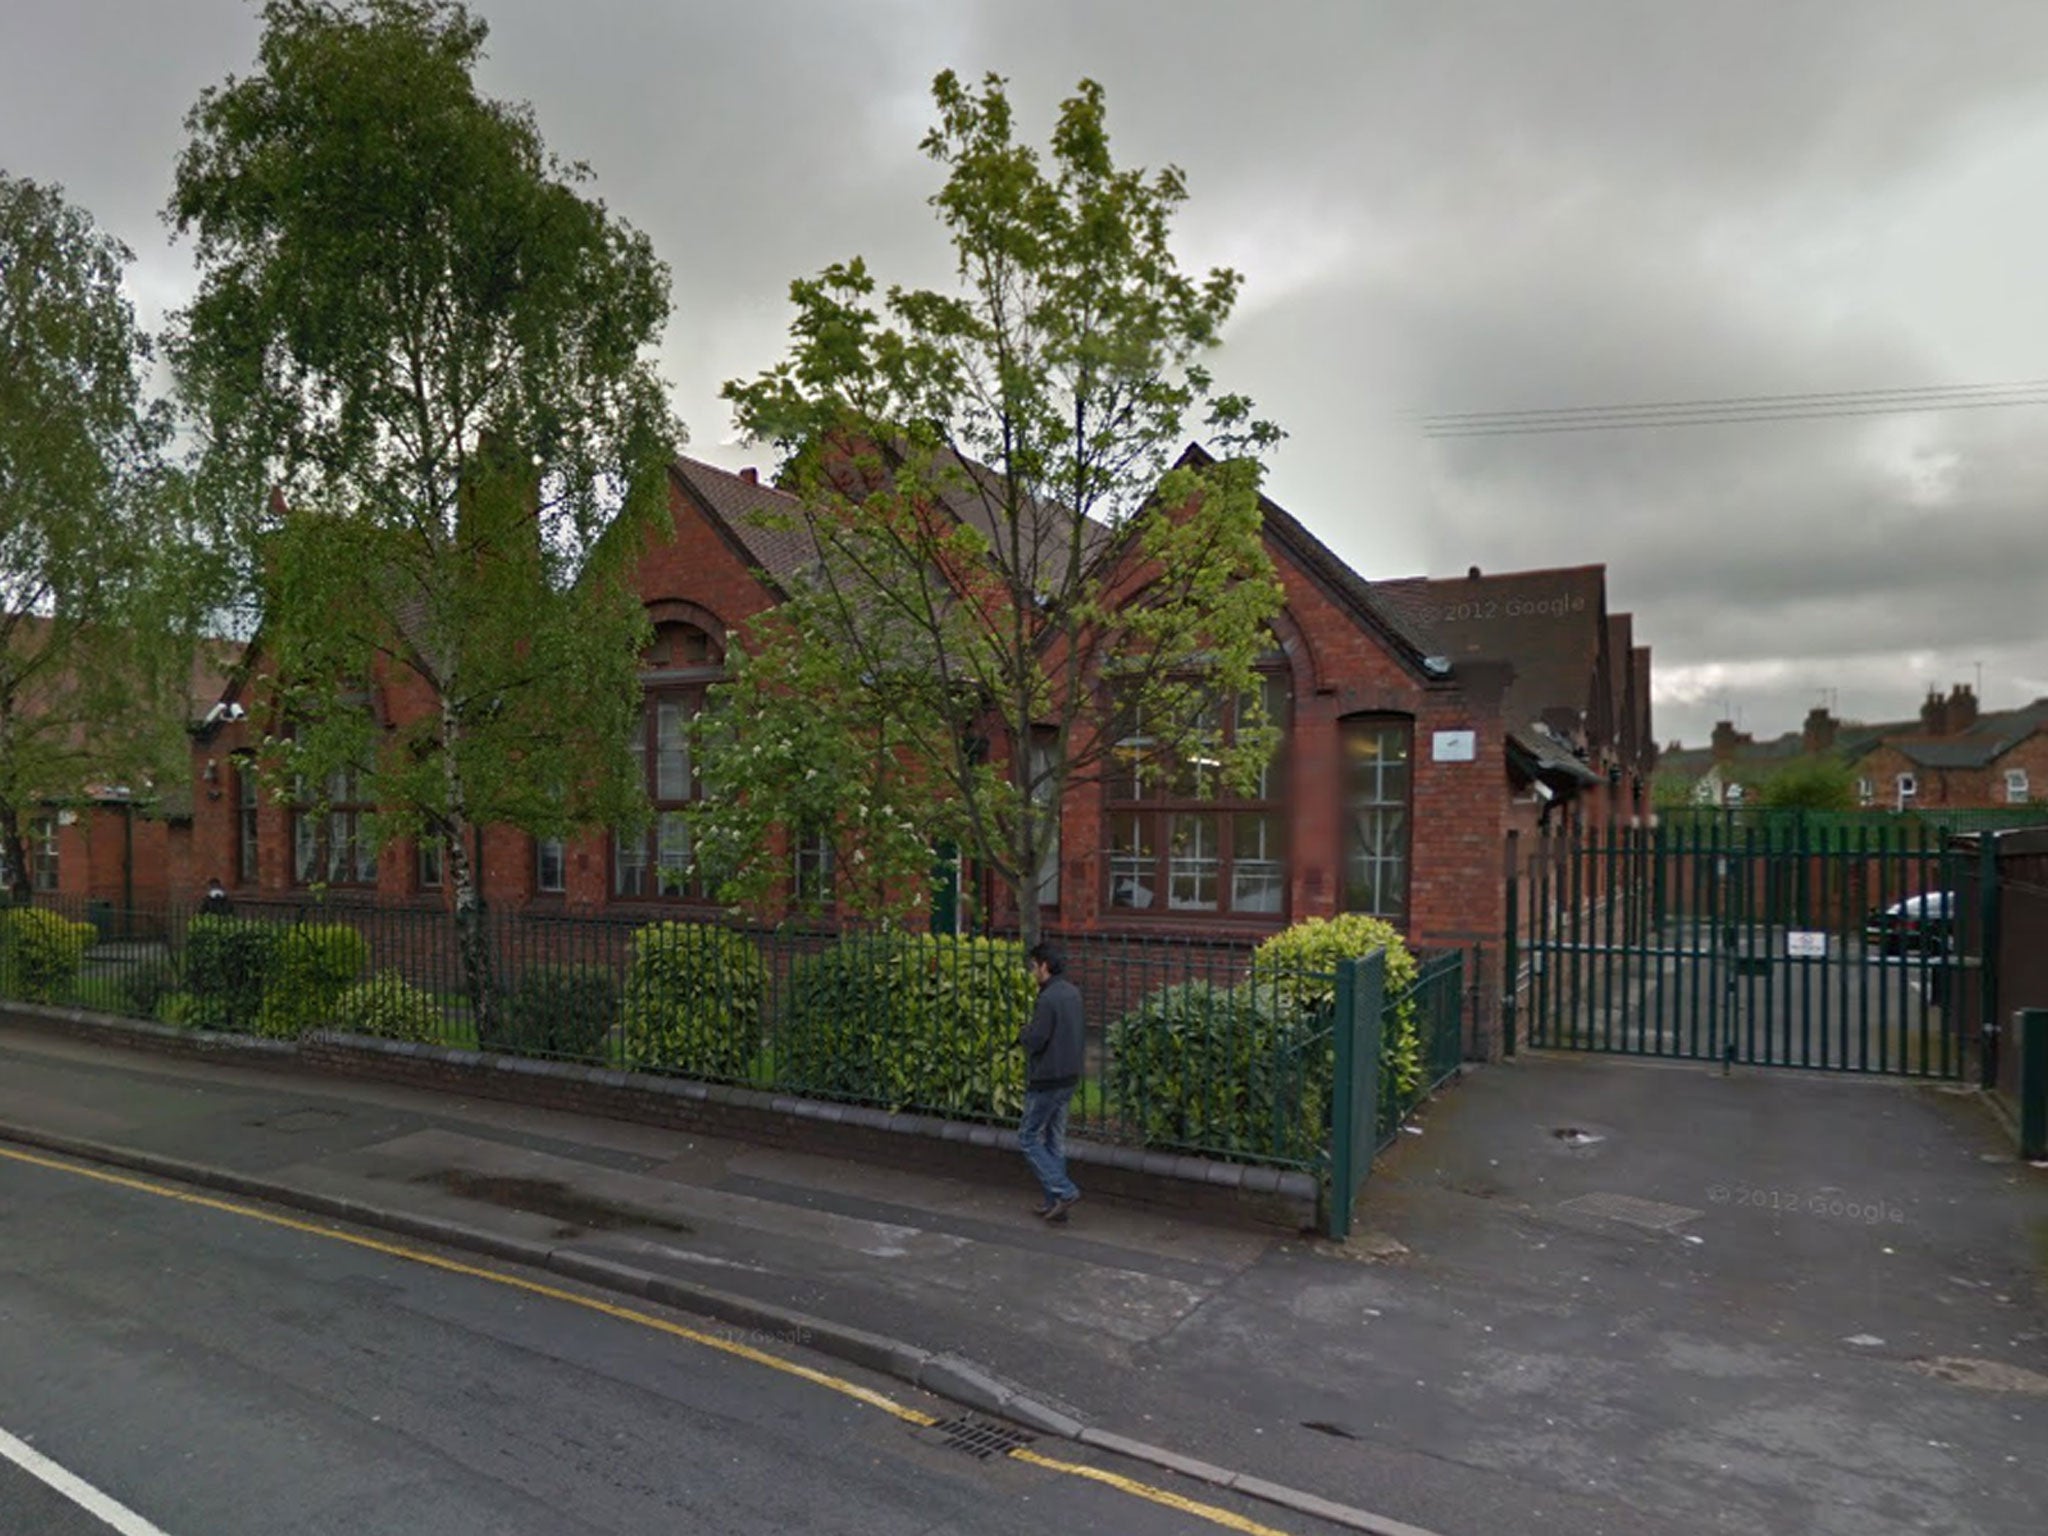 Golden HIllock School in Sparkhill, Birmingham